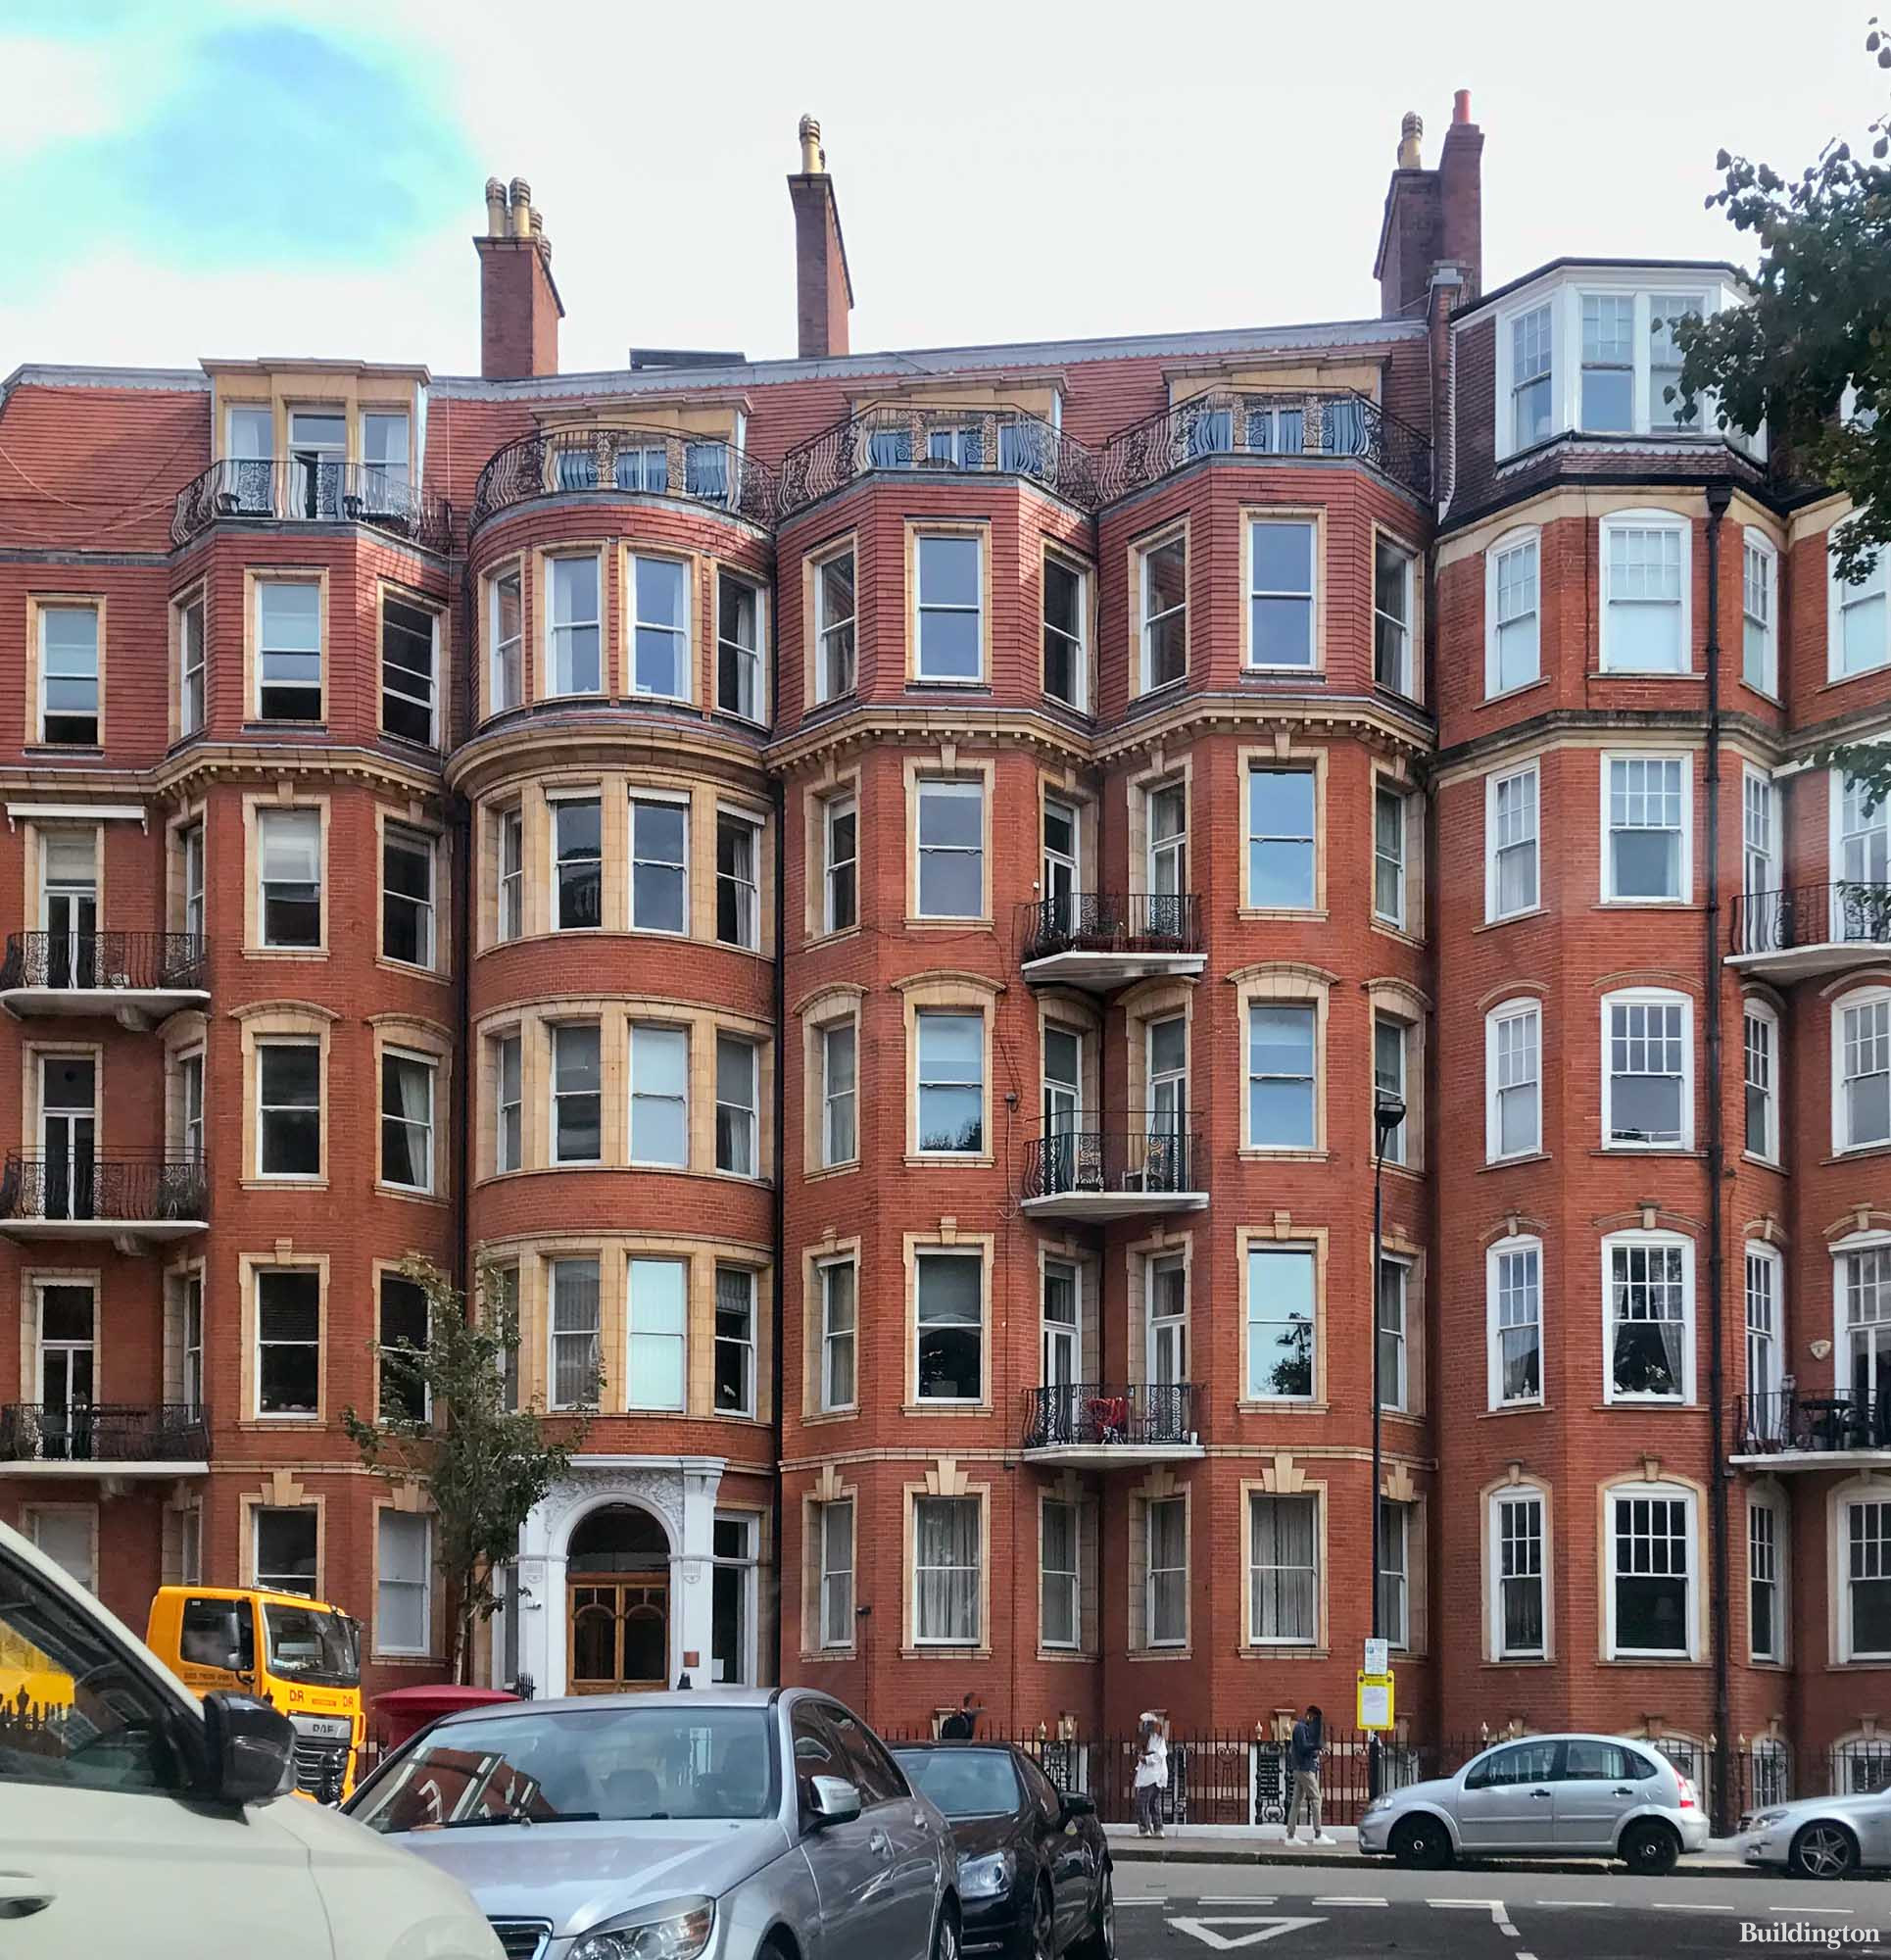 Cedar House flats on Marloes Road; view from Abigndon Villas in Kensington, London W8.